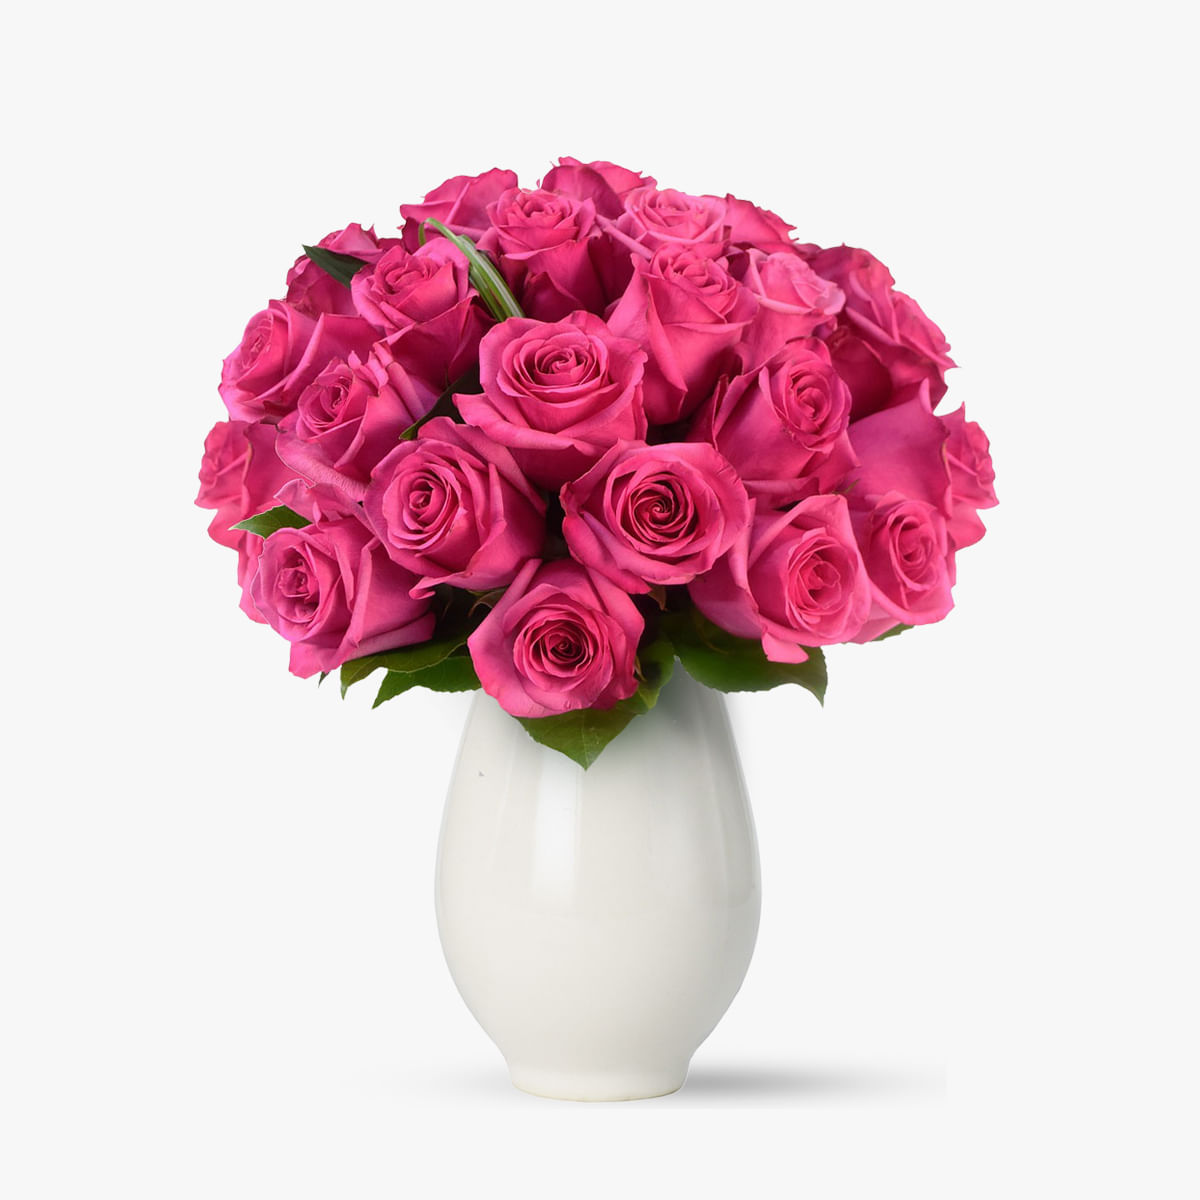 Buchet de 29 trandafiri rosii – Standard Buchet